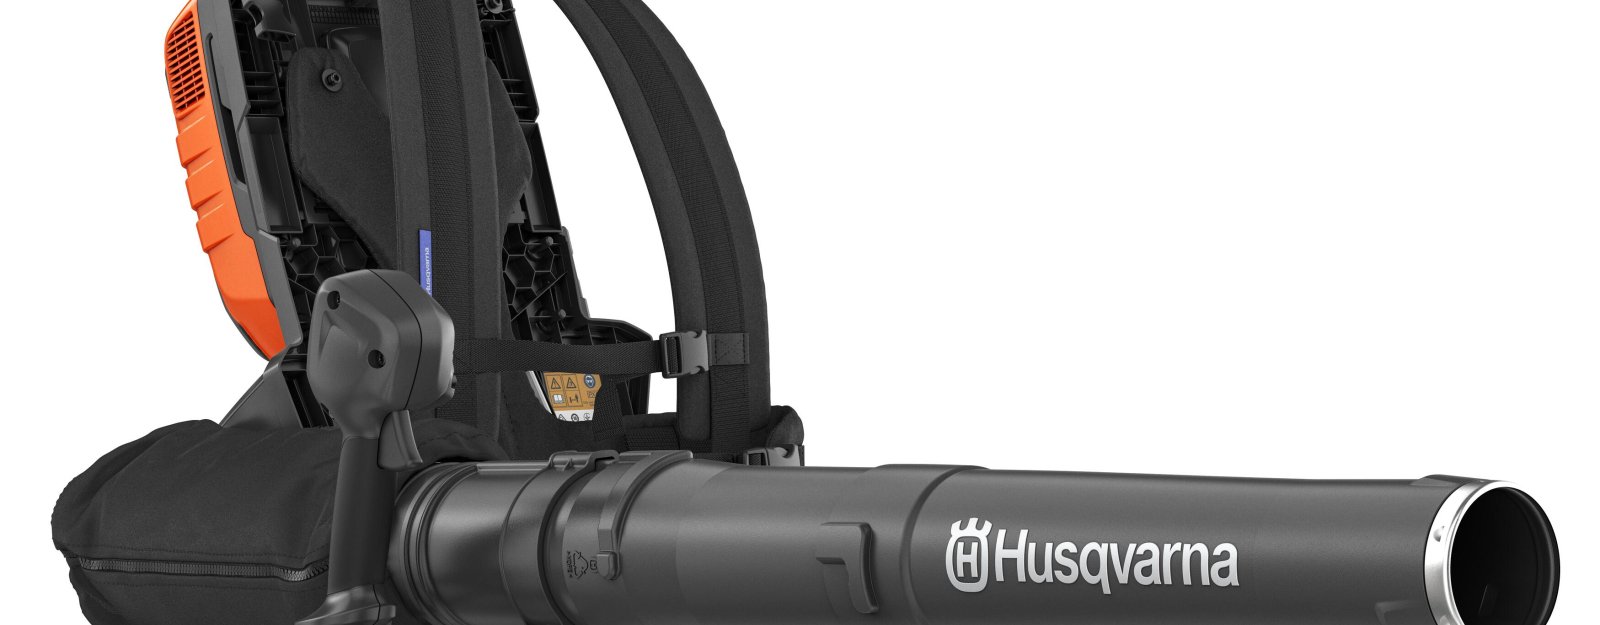 Husqvarna 550i BTX Battery Back-Pack Leaf Blower